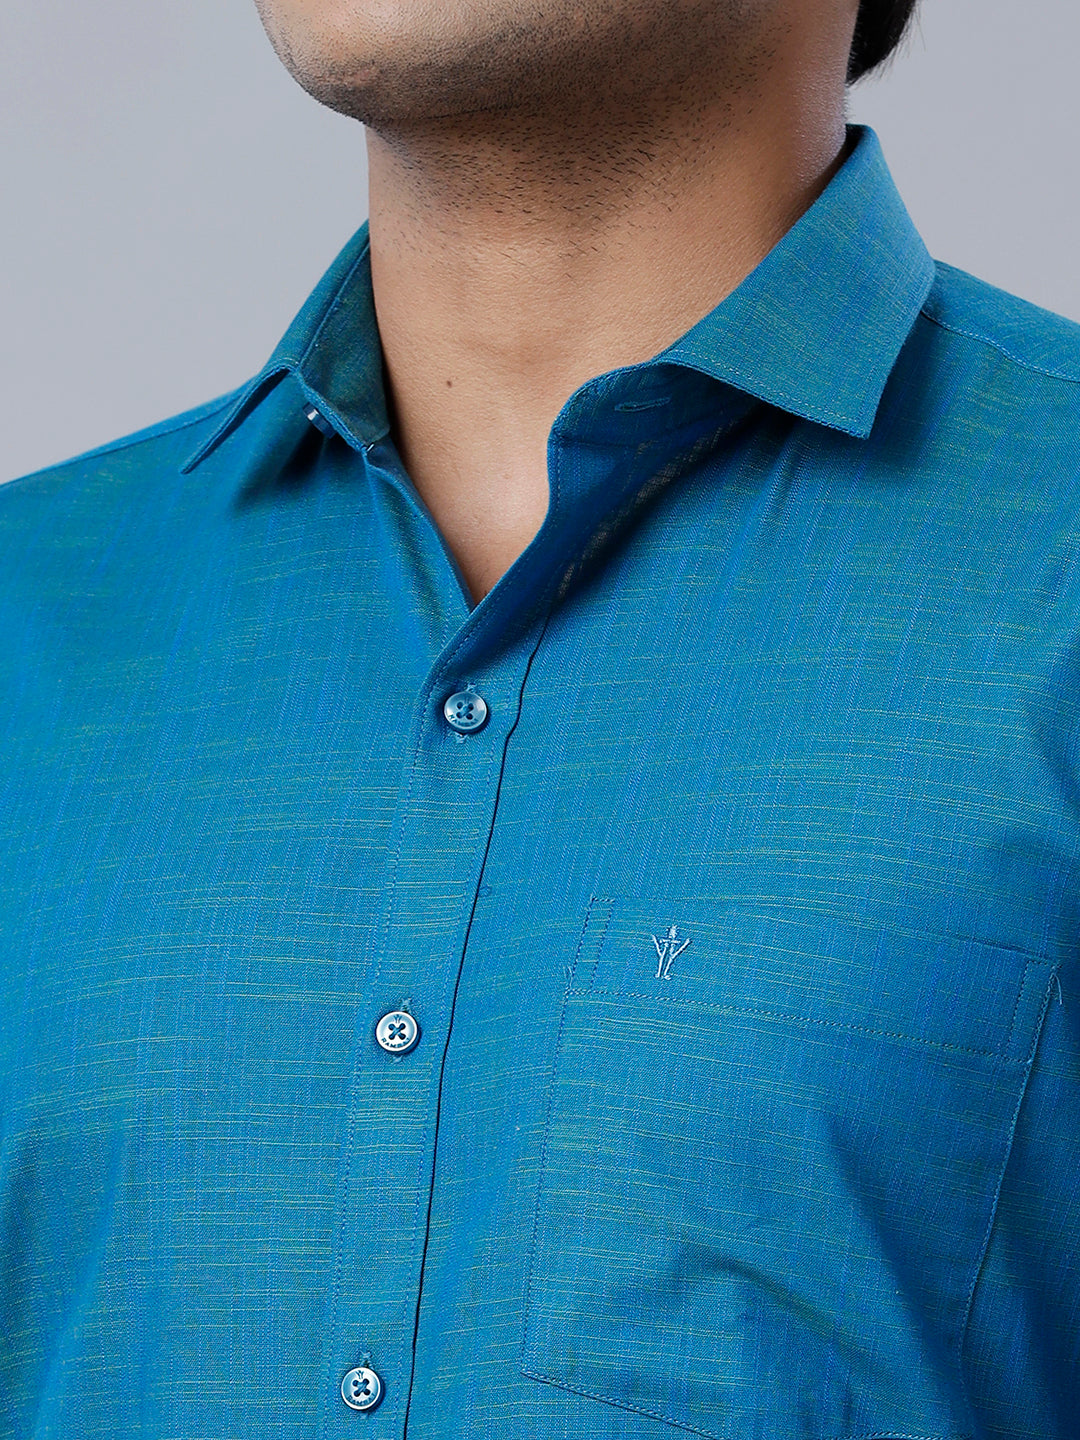 Mens Formal Shirt Full Sleeves Greenish Blue CL2 GT29-Zoom view